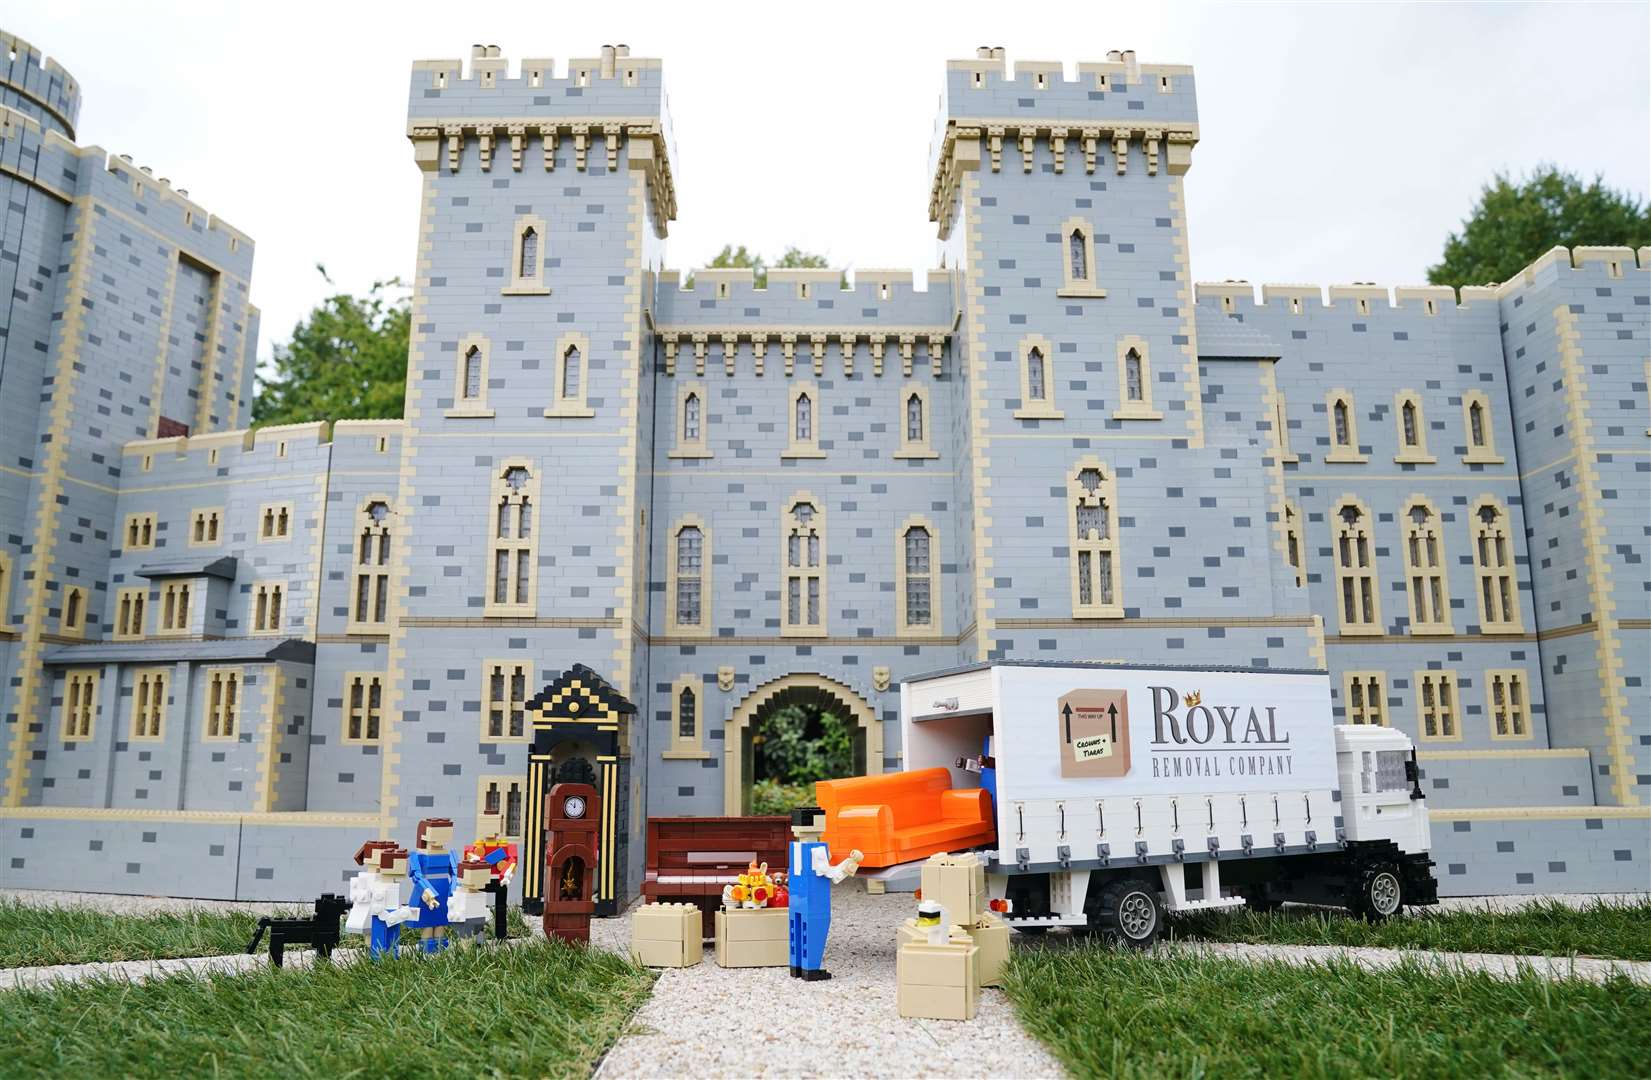 Mini Lego figures of the family are unveiled at Legoland Windsor (Jonathan Brady/PA)